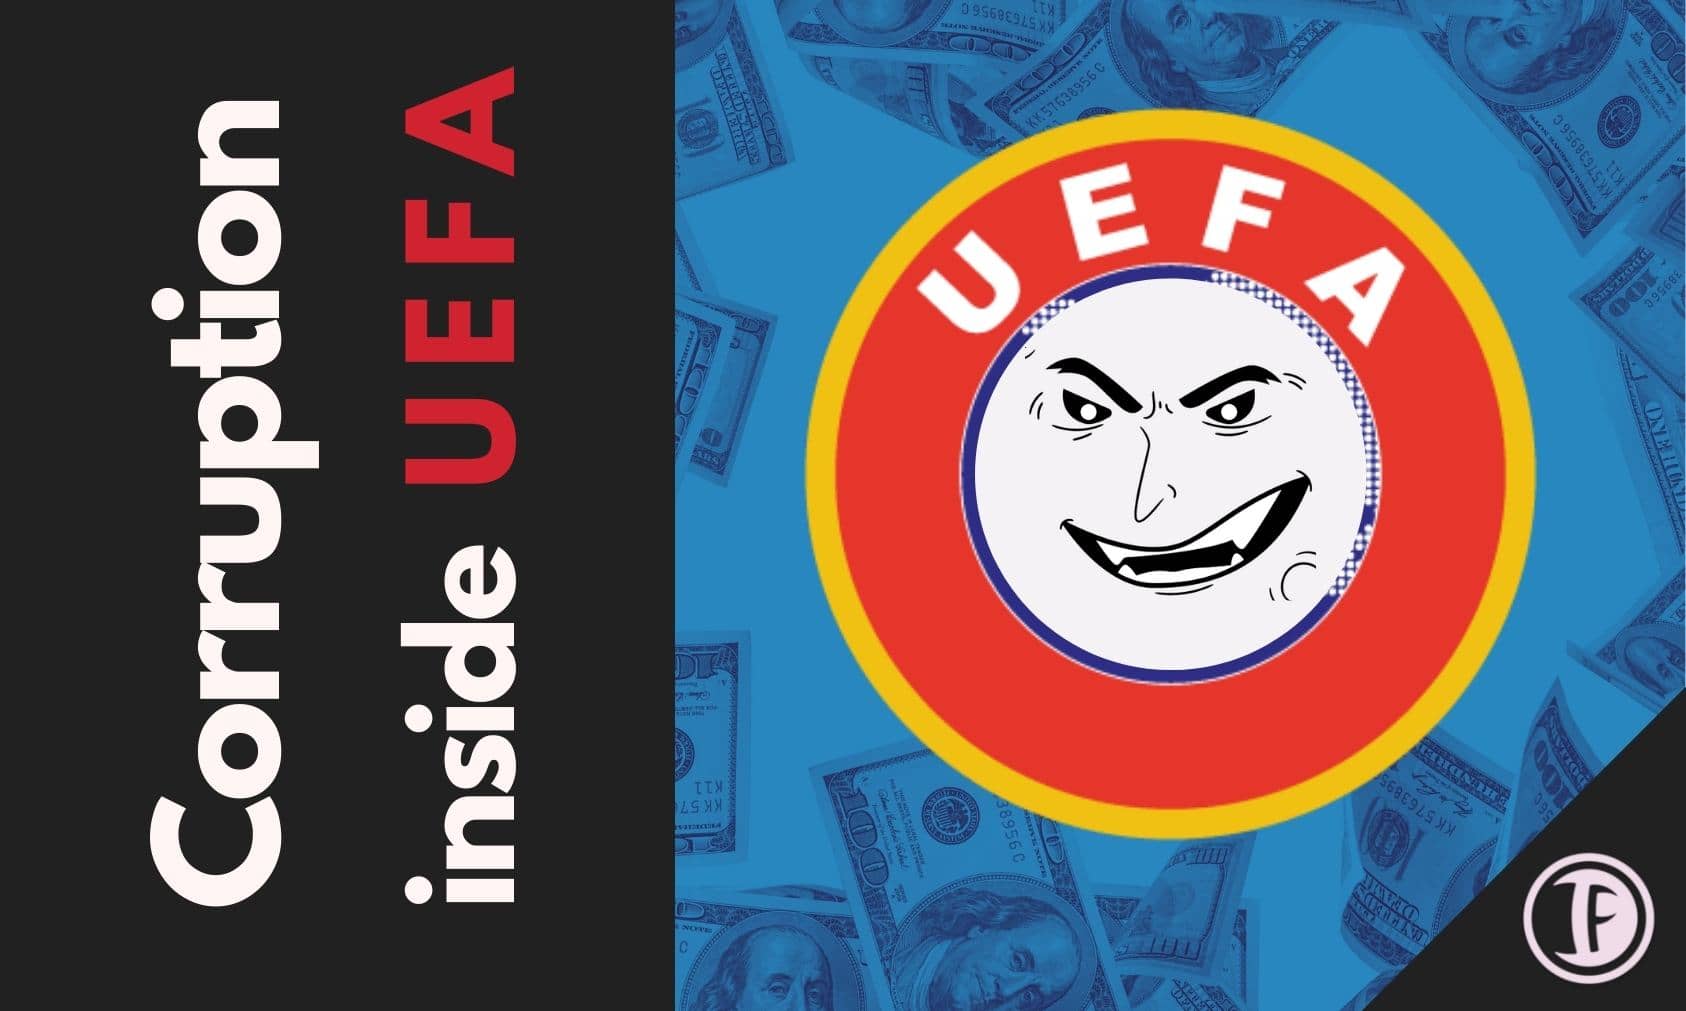 UEFA corruption